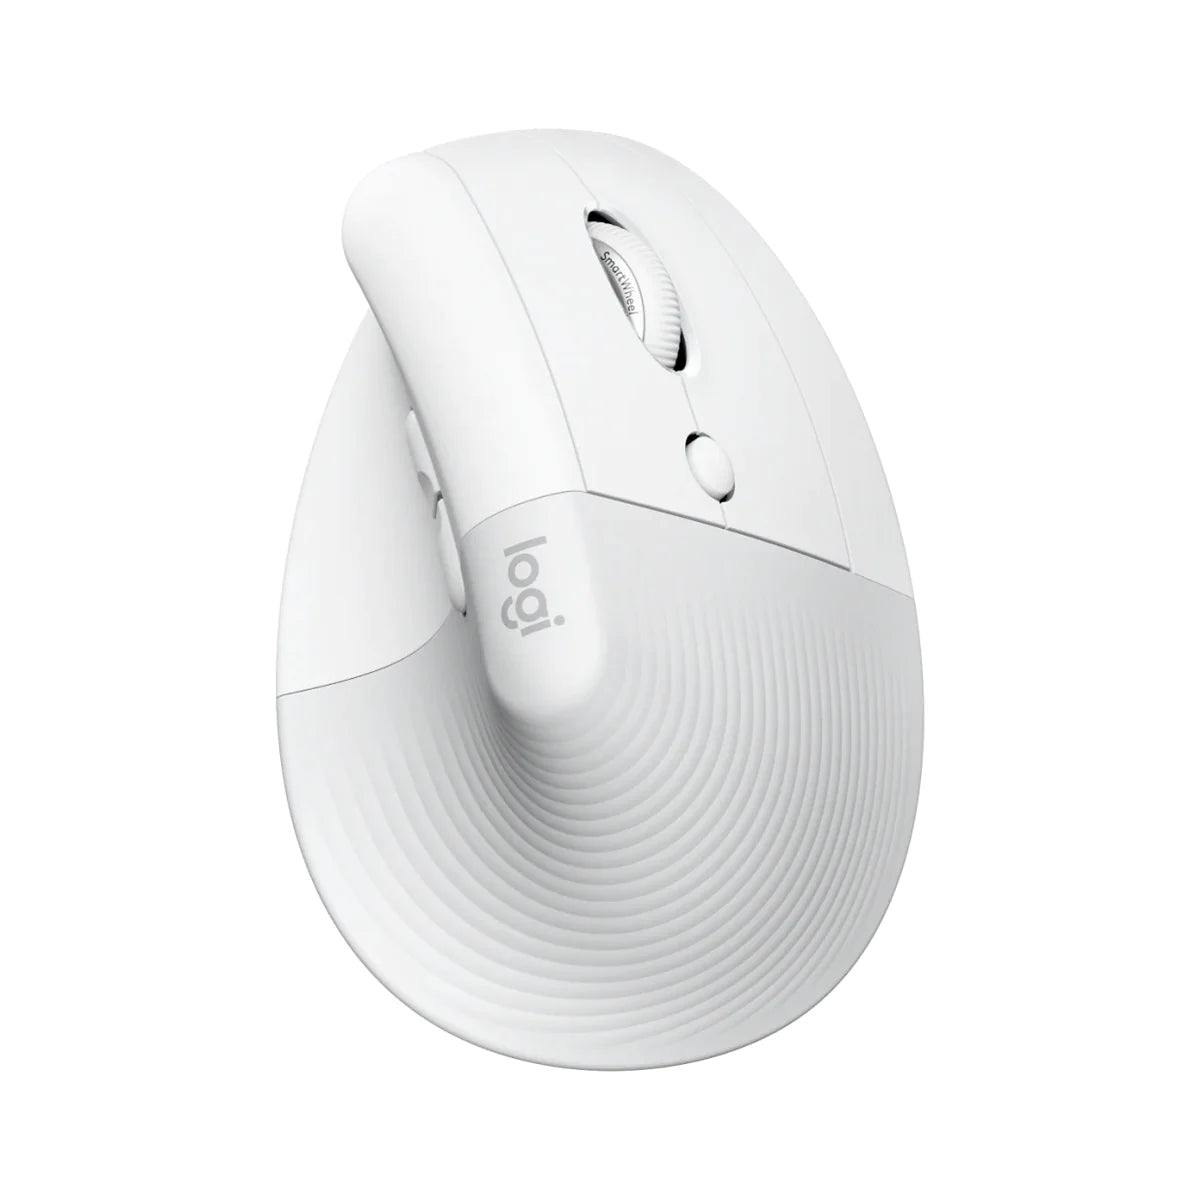 Logitech LIFT Vertical Ergonomic Mouse Bluetooth Wireless Ergonomic Vertical Mouse